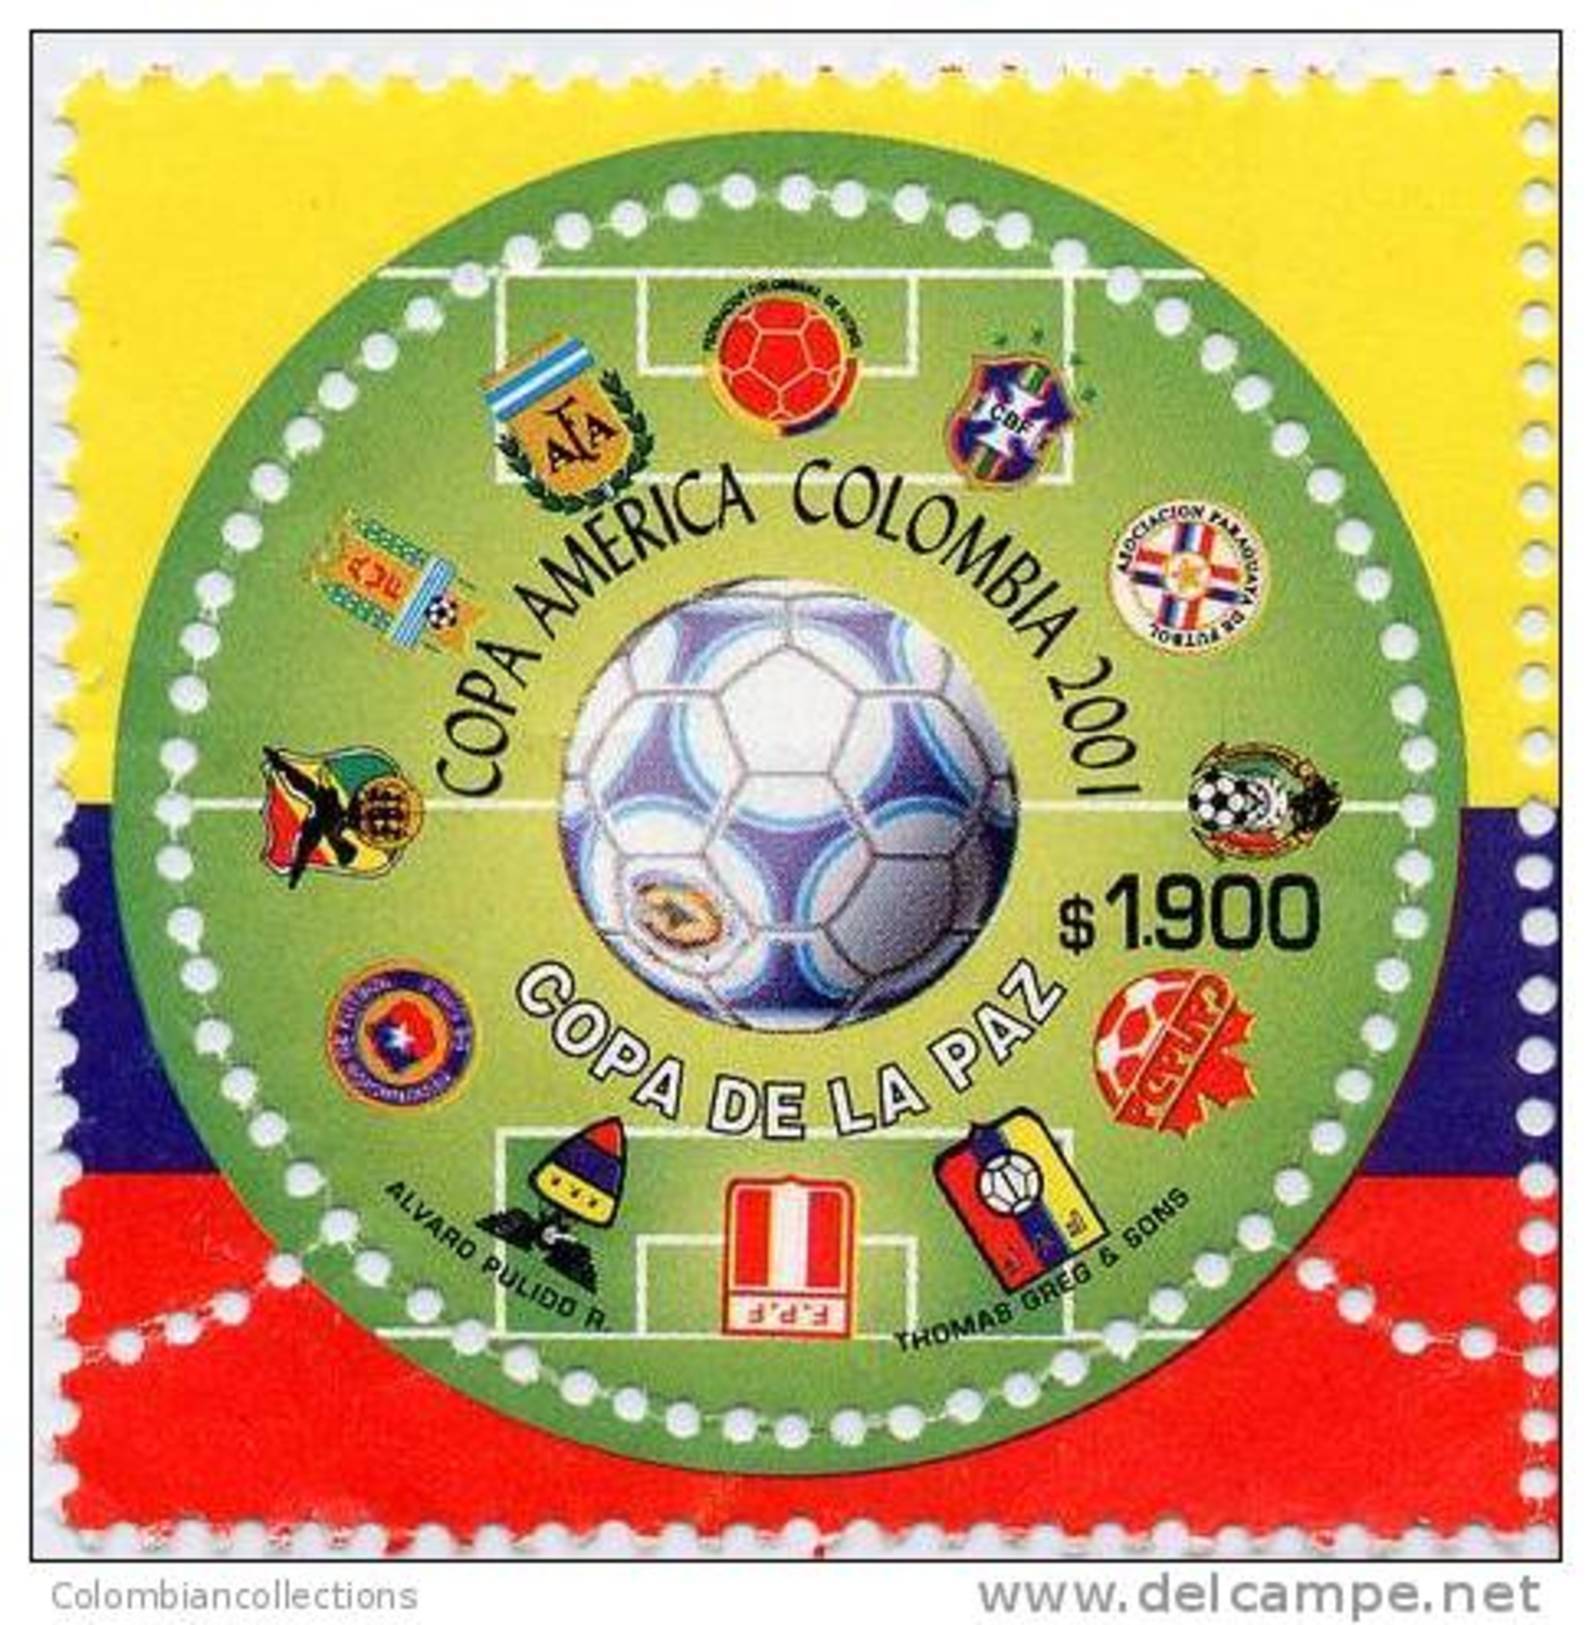 Lote 68e, Colombia, 2001, Futbol, Estampilla Inusual, No Regular, Unsual, Circular Stamp - Kolumbien